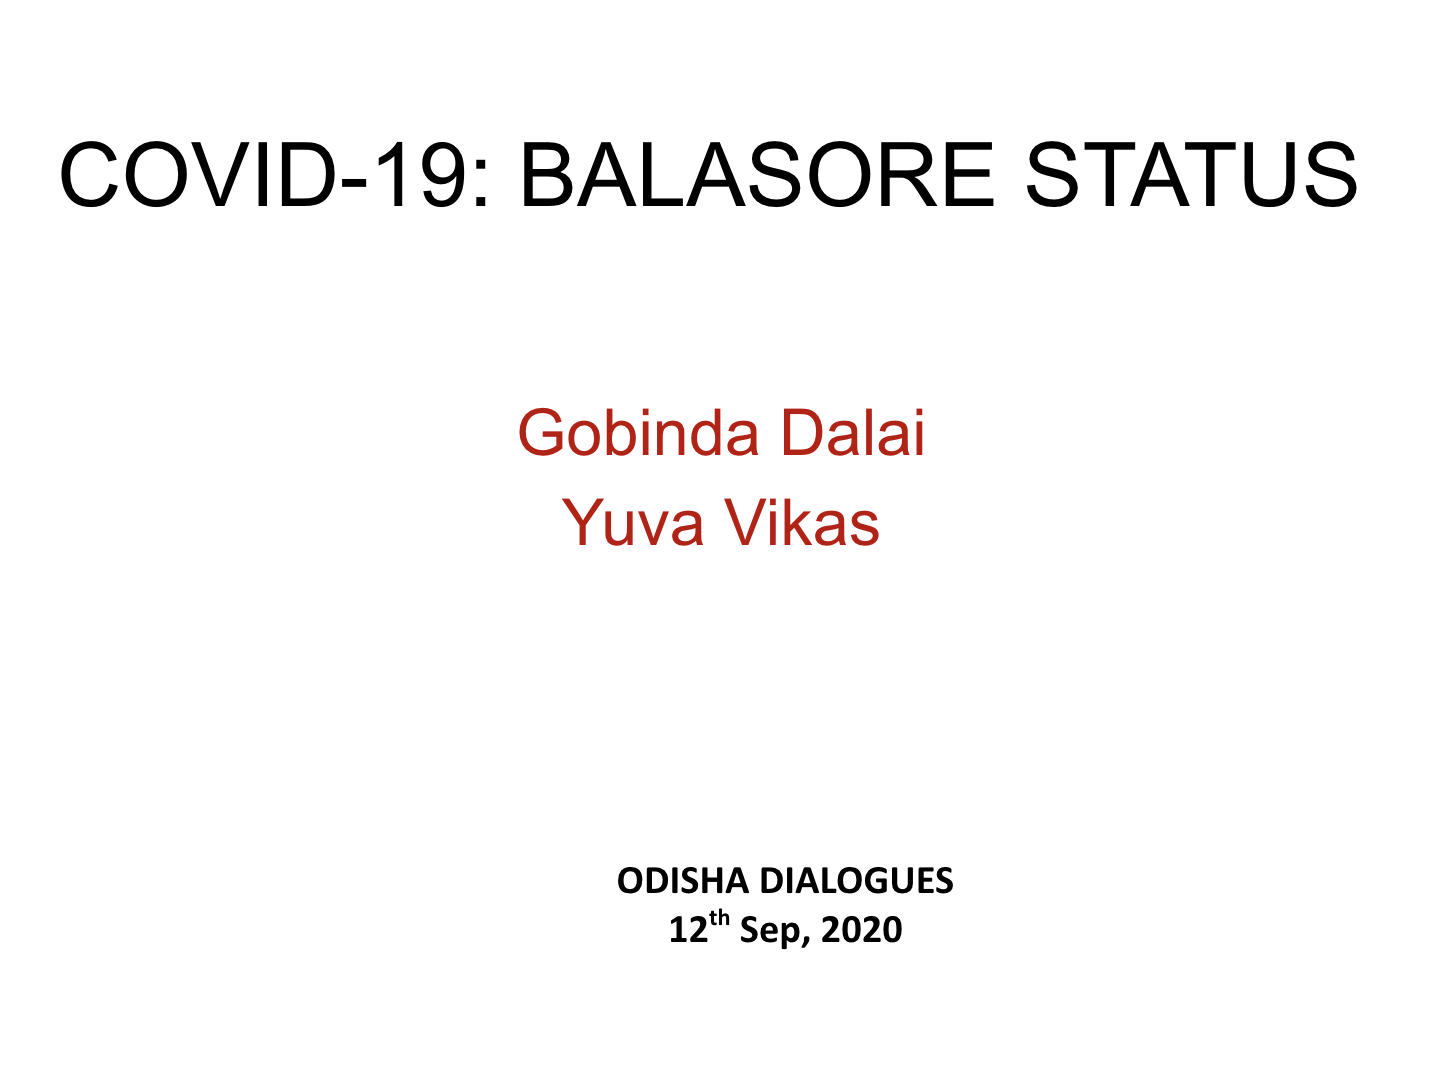 COVID-19 : Balasore Status by Gobinda Dalai, Yuva Vikas